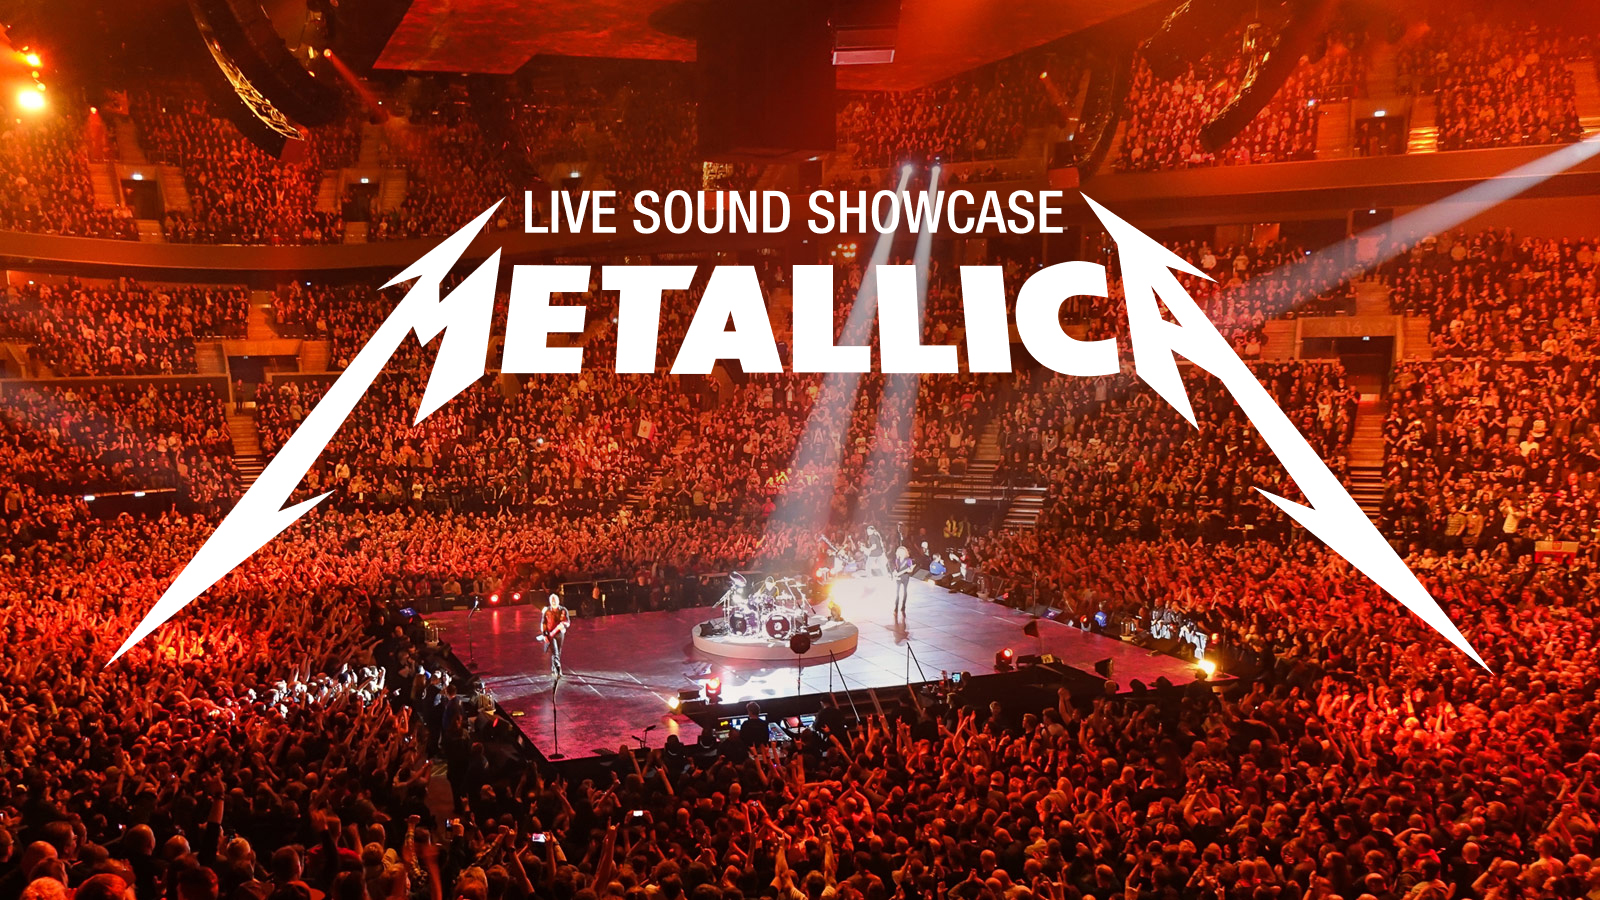 METALLICA_Live sound showcase